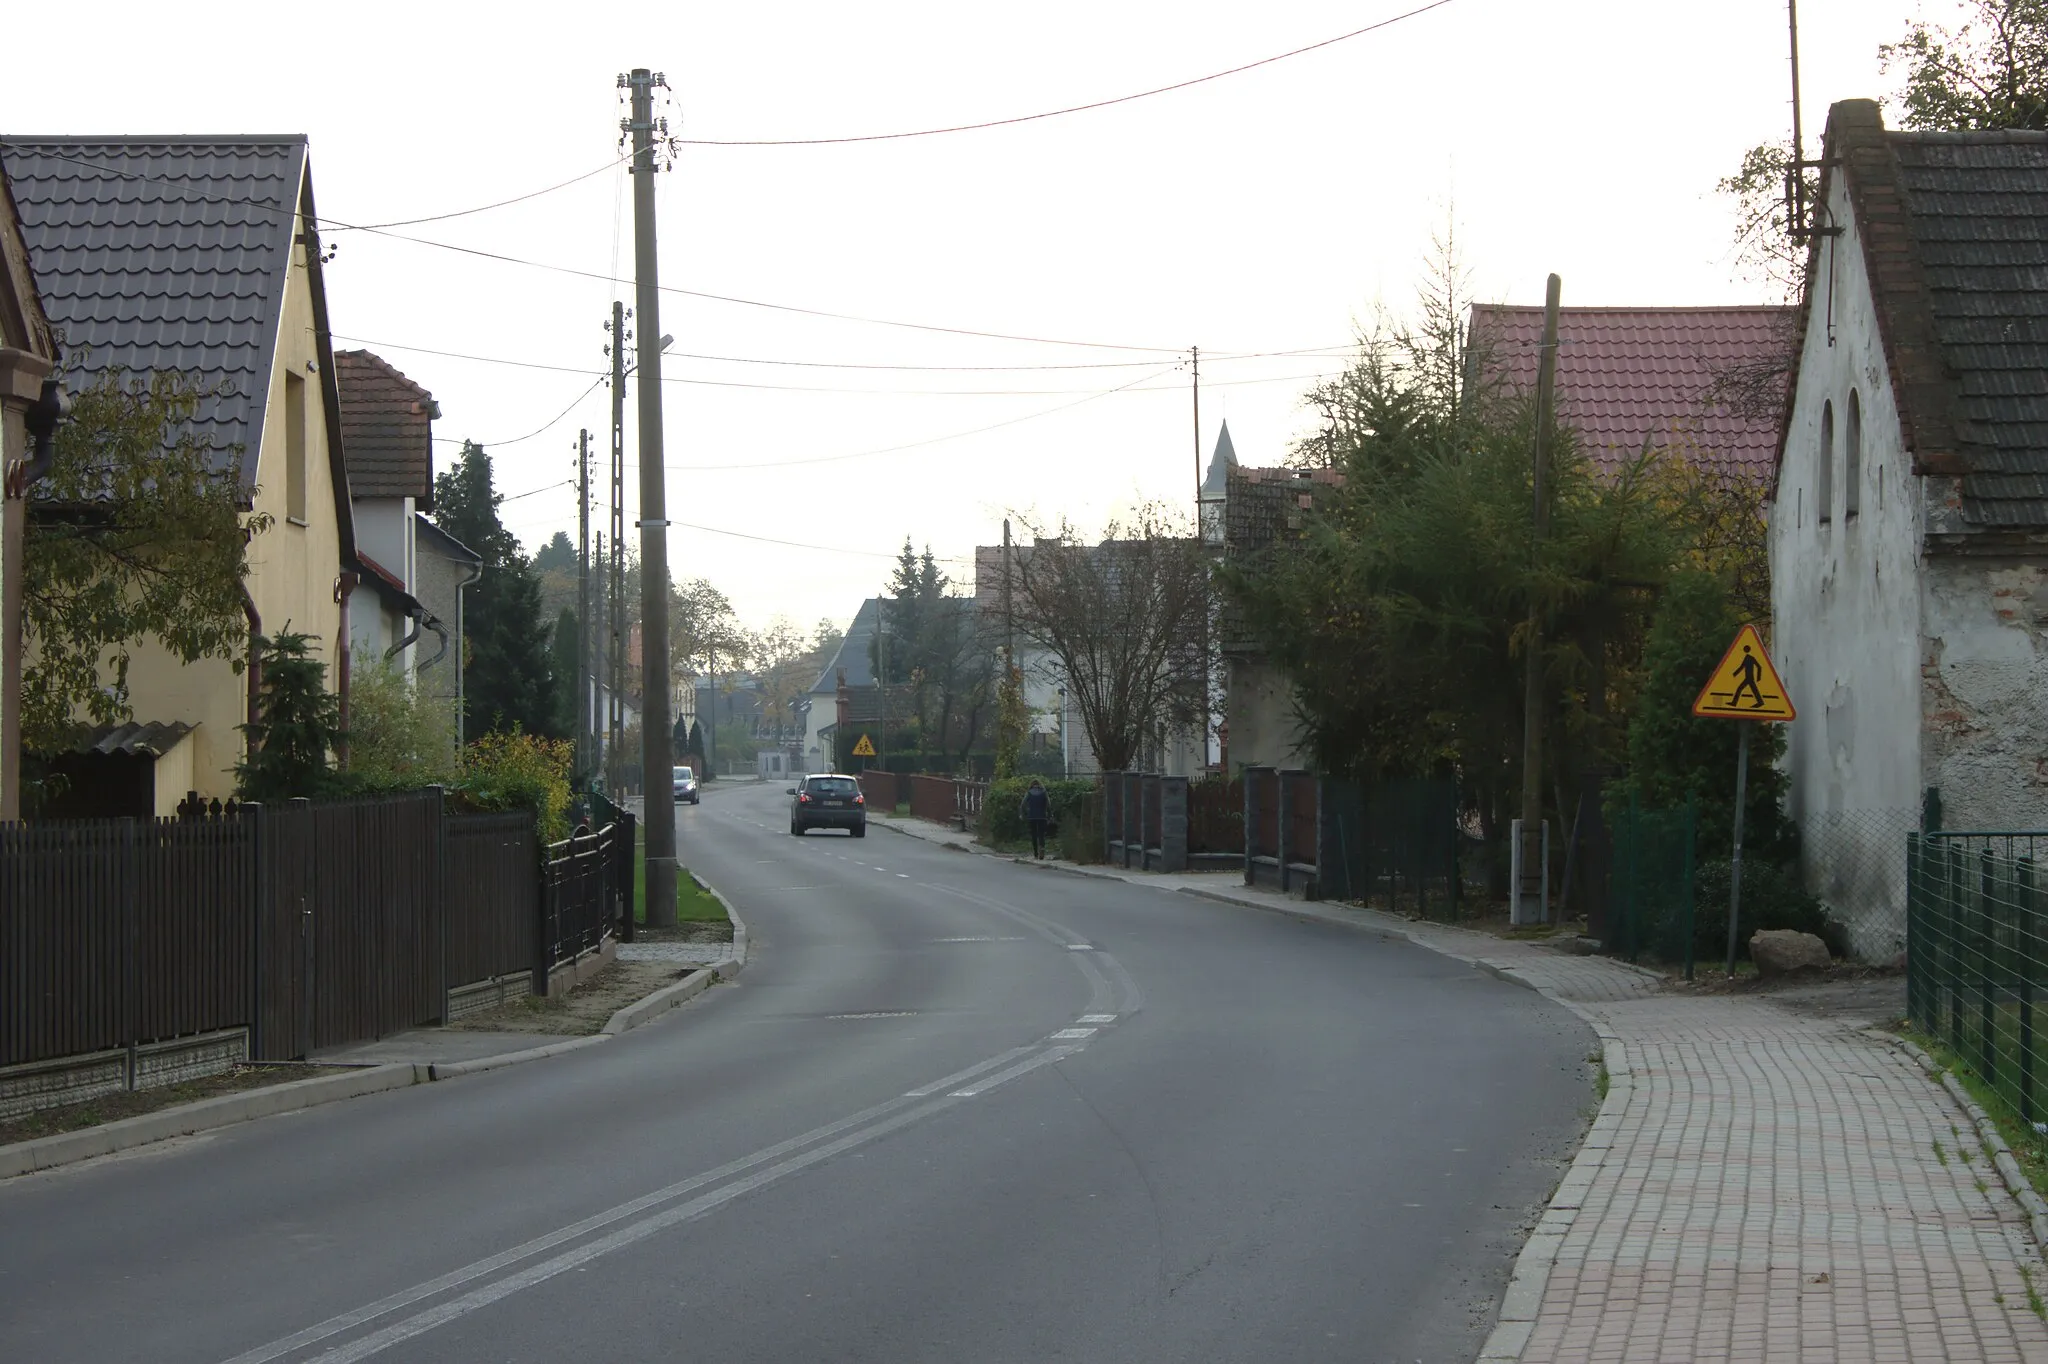 Photo showing: Main road in the village of Raszowa, Opole Voivodeship, Poland